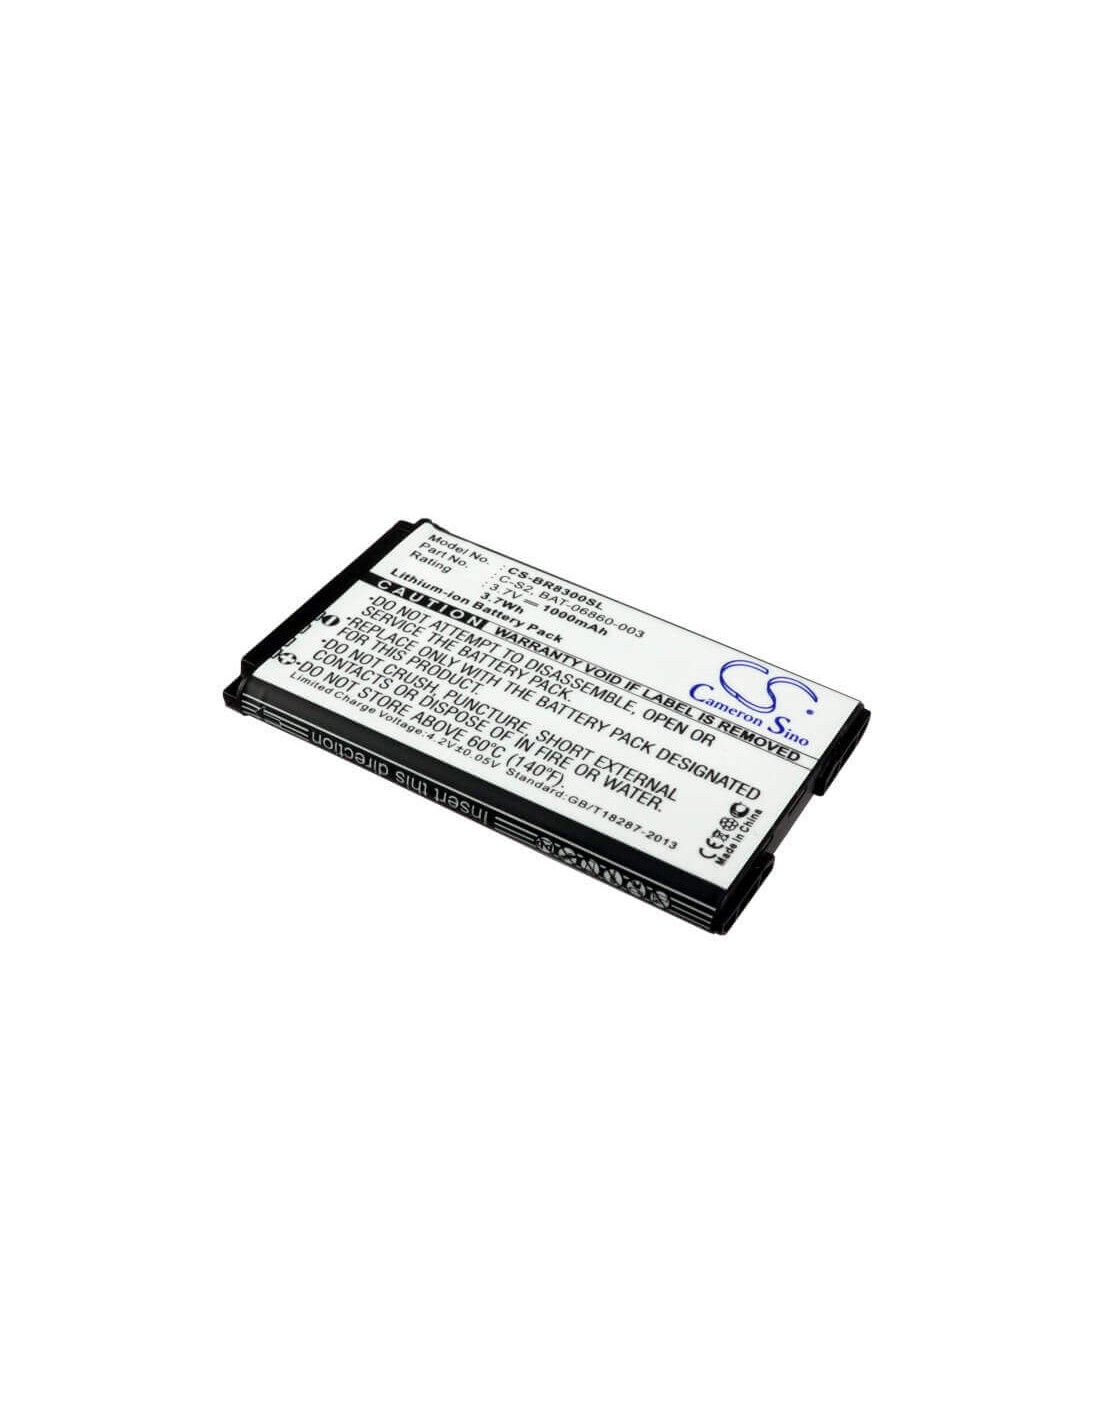 Battery for Blackberry Curve 8300, Curve 8310, Curve 8320 3.7V, 1000mAh - 3.70Wh